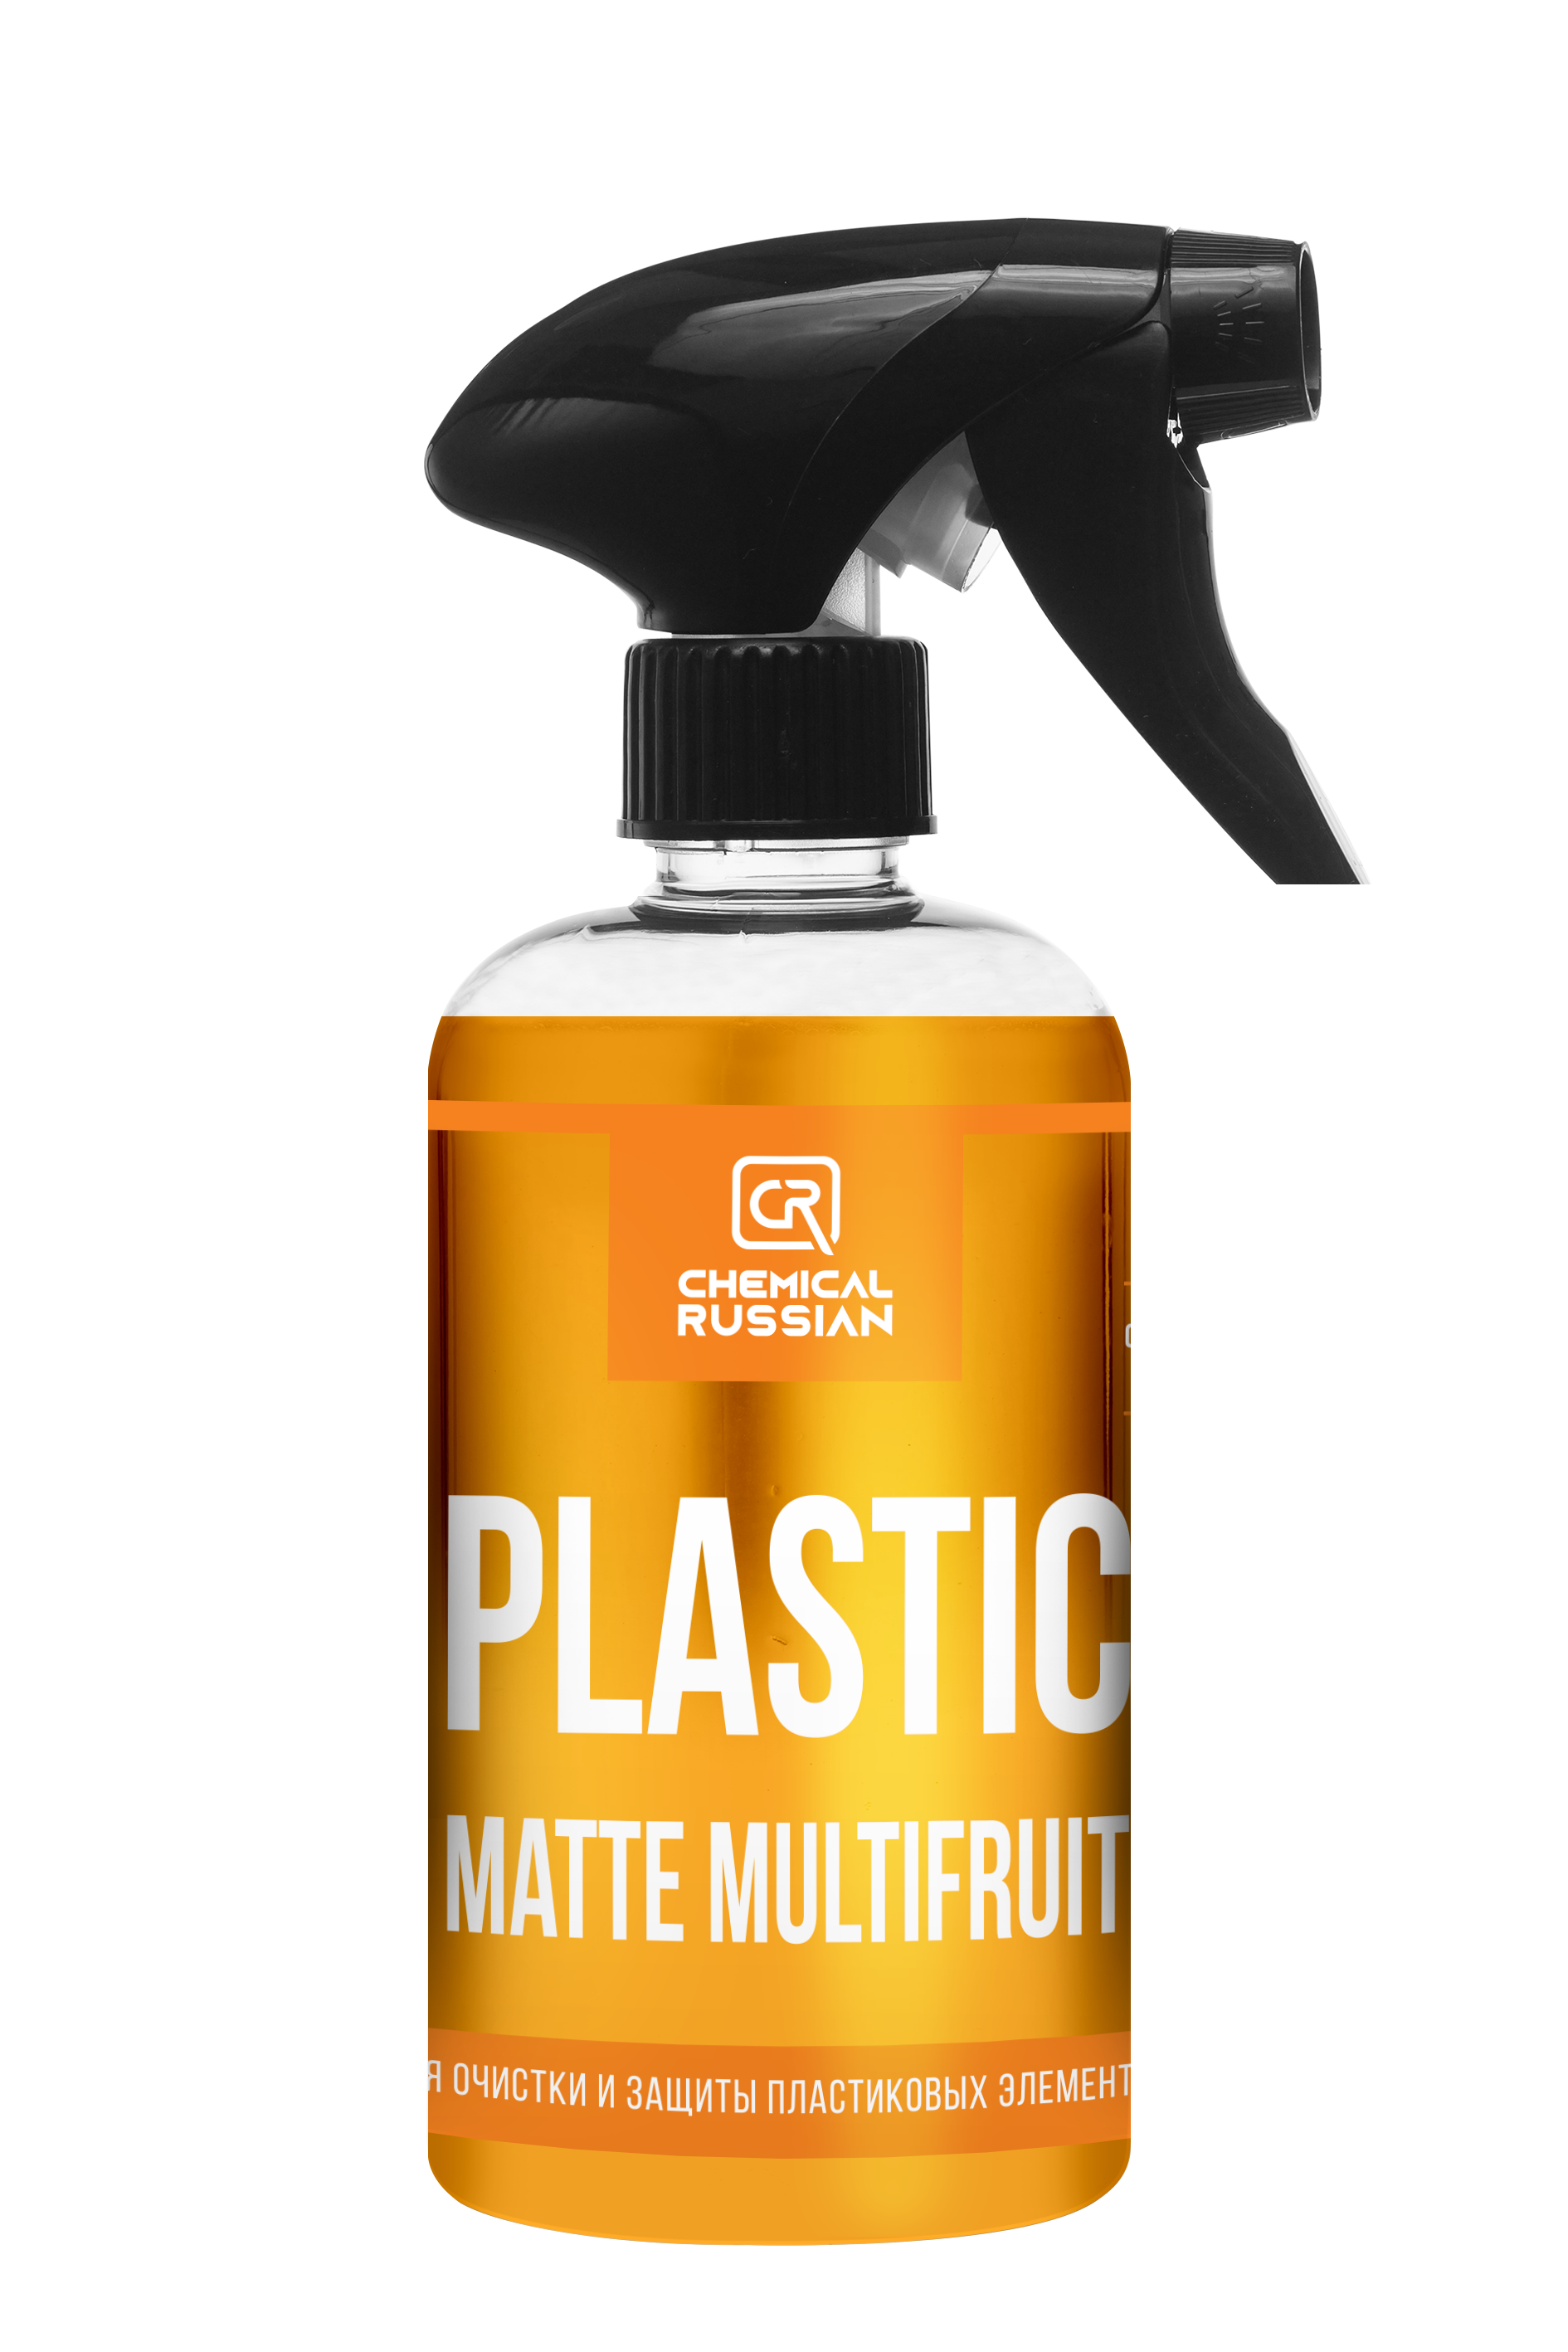 Полироль для пластика матовая Chemical Russian Plastic Matte Multifruit